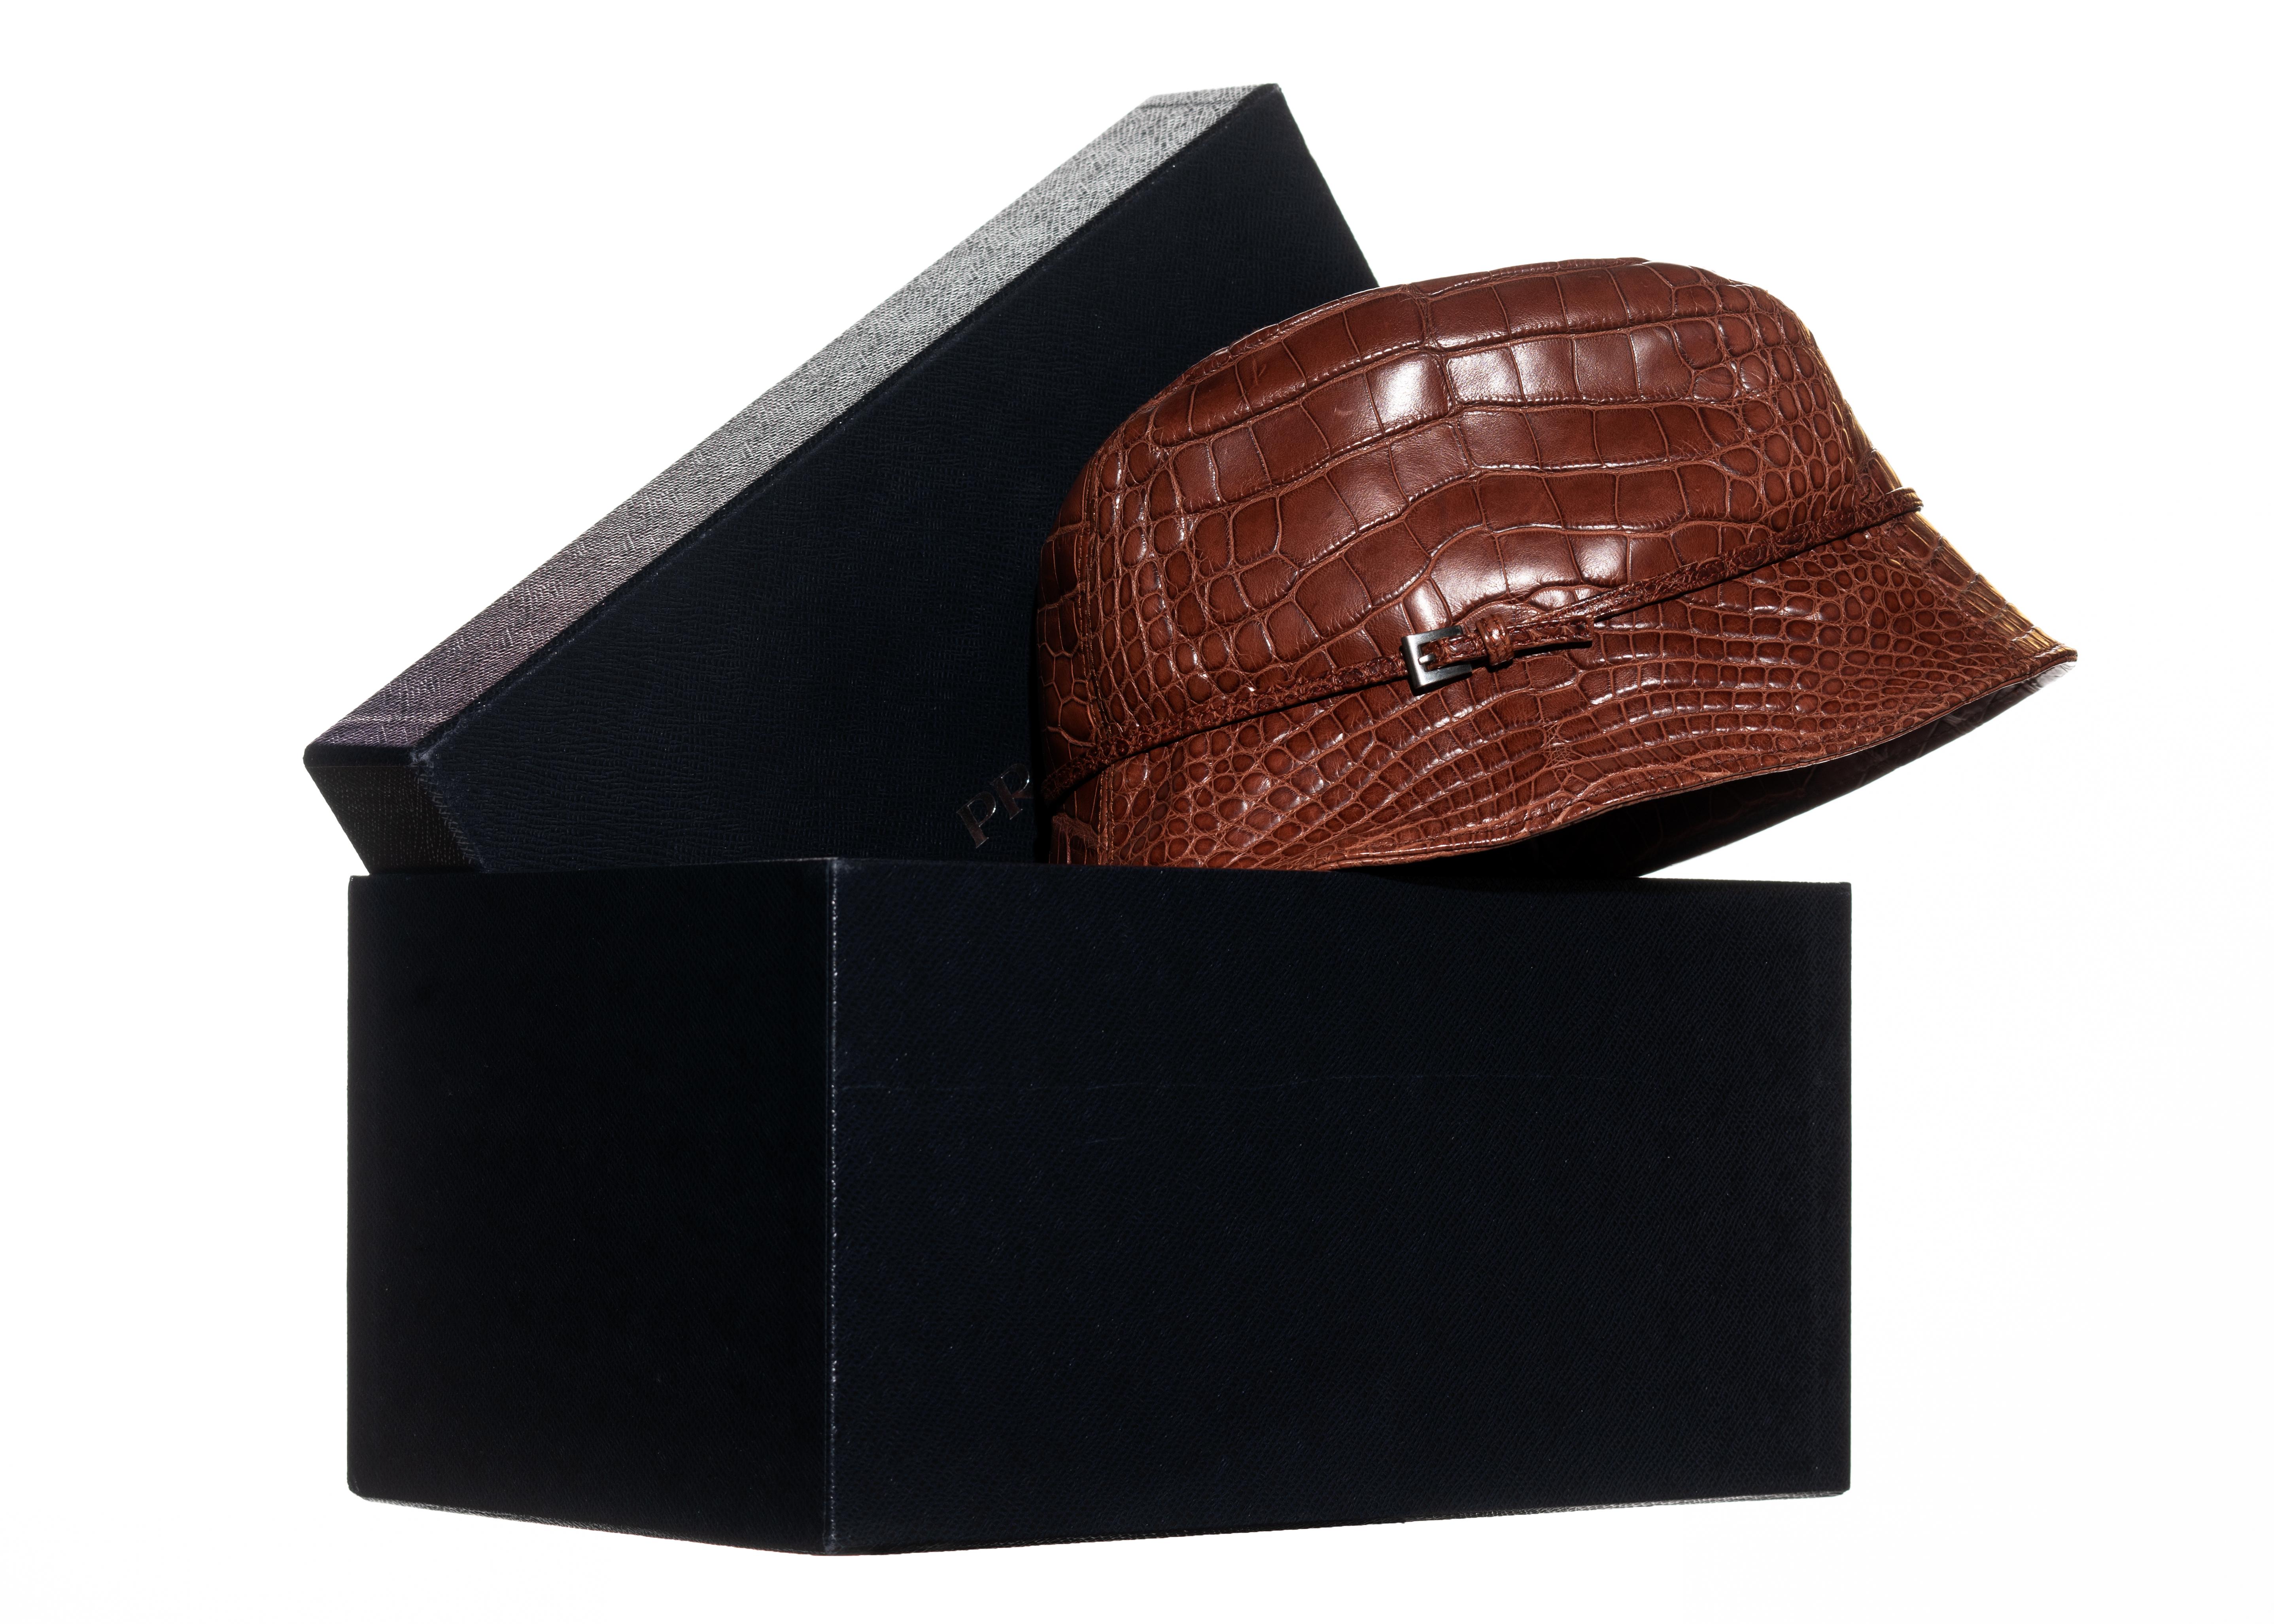 ▪ Prada brown alligator bucket hat
▪ Metal buckle detail 
▪ Limited edition
▪ Nylon lining 
▪ Comes with Prada hat box
▪ Size Medium
▪ Fall-Winter 2003